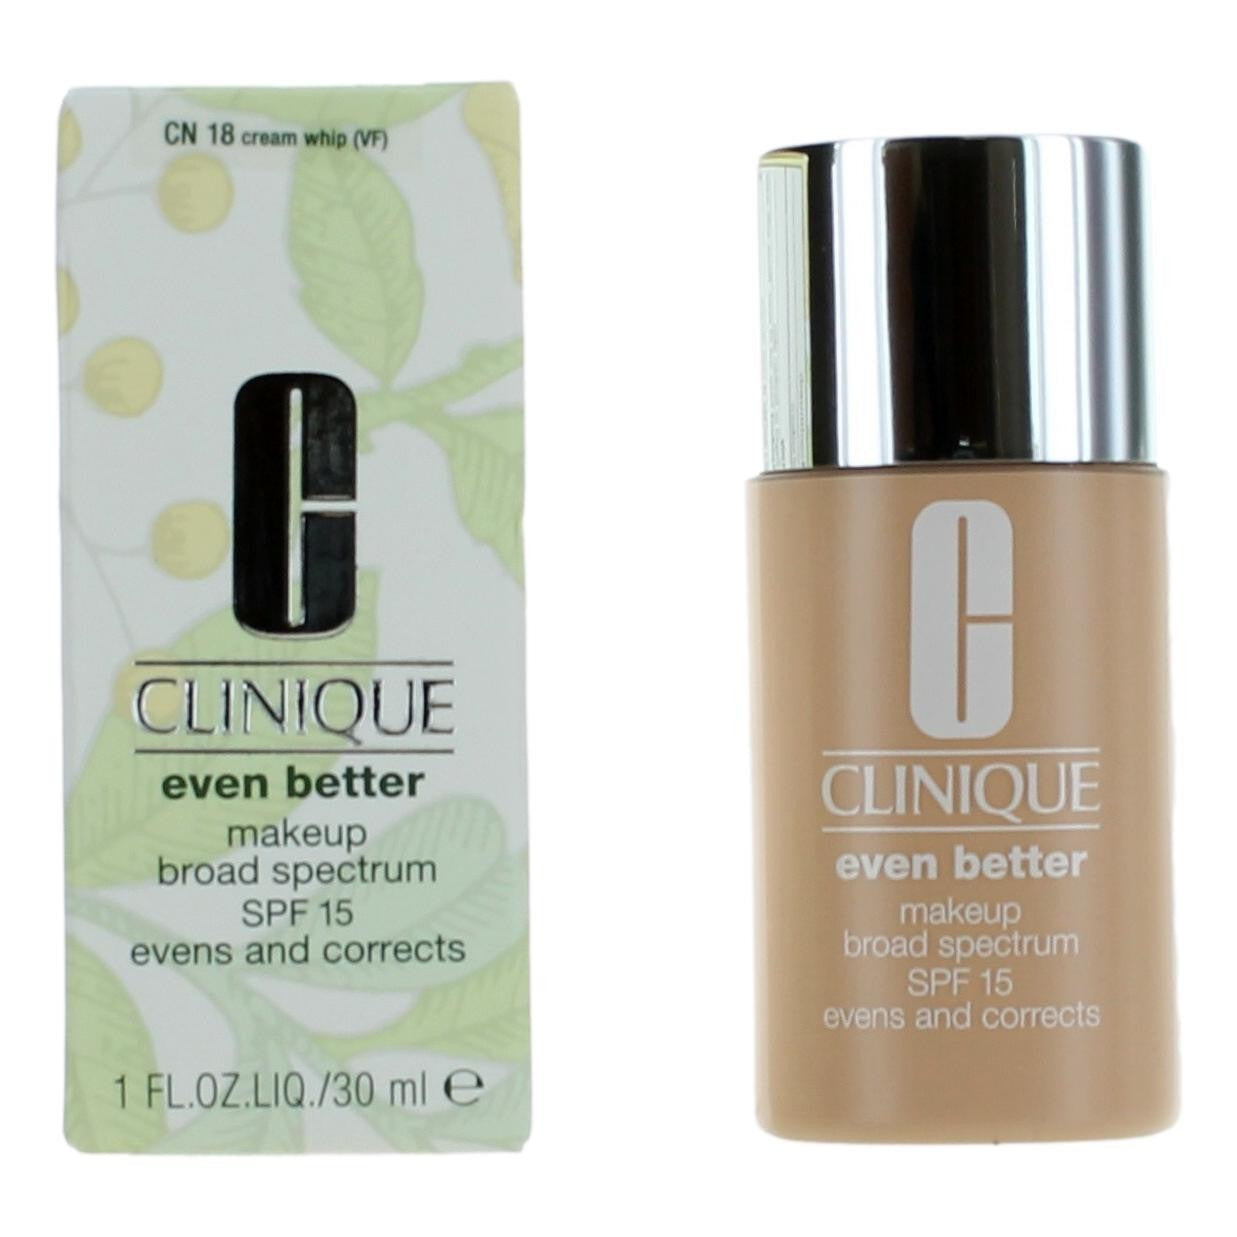 Clinique by Clinique, 1oz Even Better Makeup SPF 15 - CN 18 Cream Whip - CN 18 Cream Whip